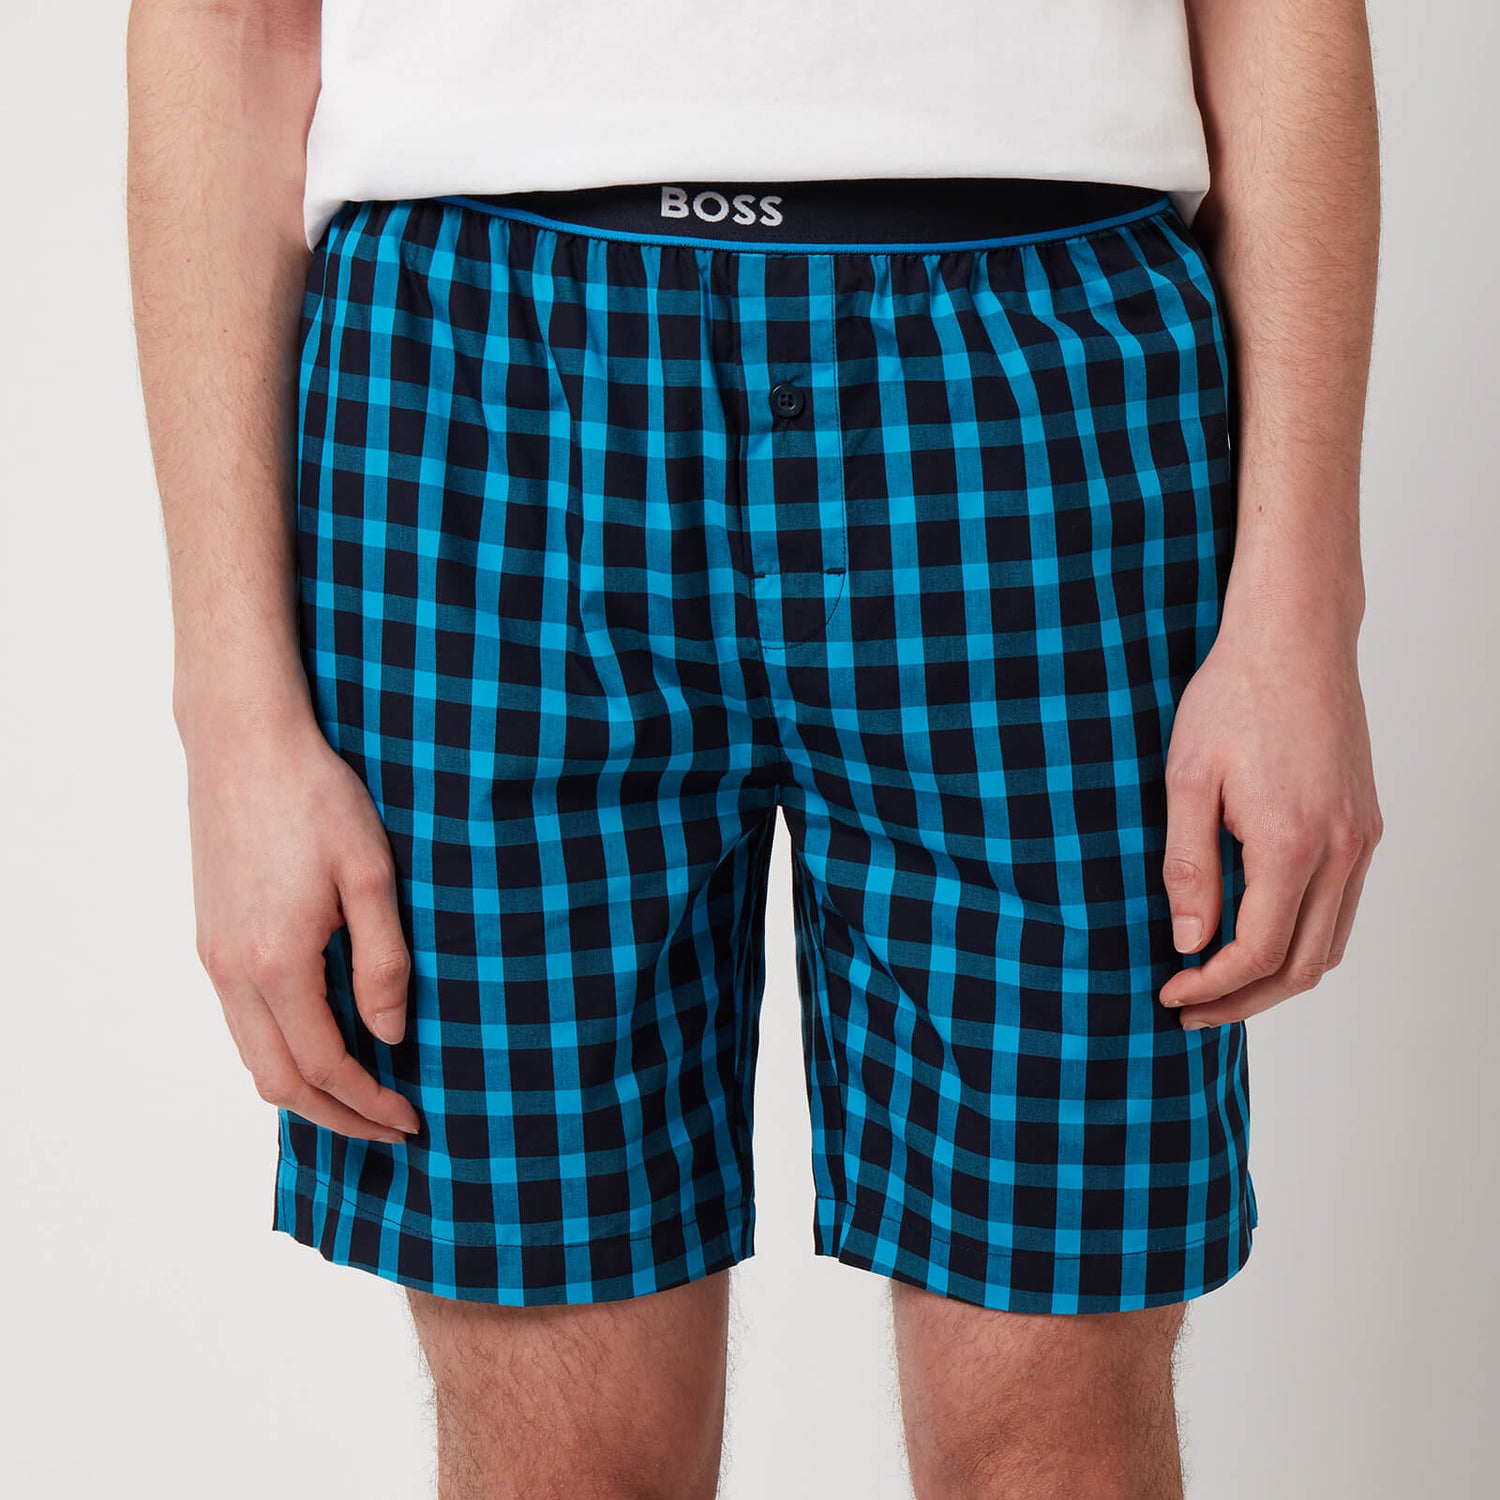 BOSS Bodywear Men's Urban Shorts - Bright Blue - S